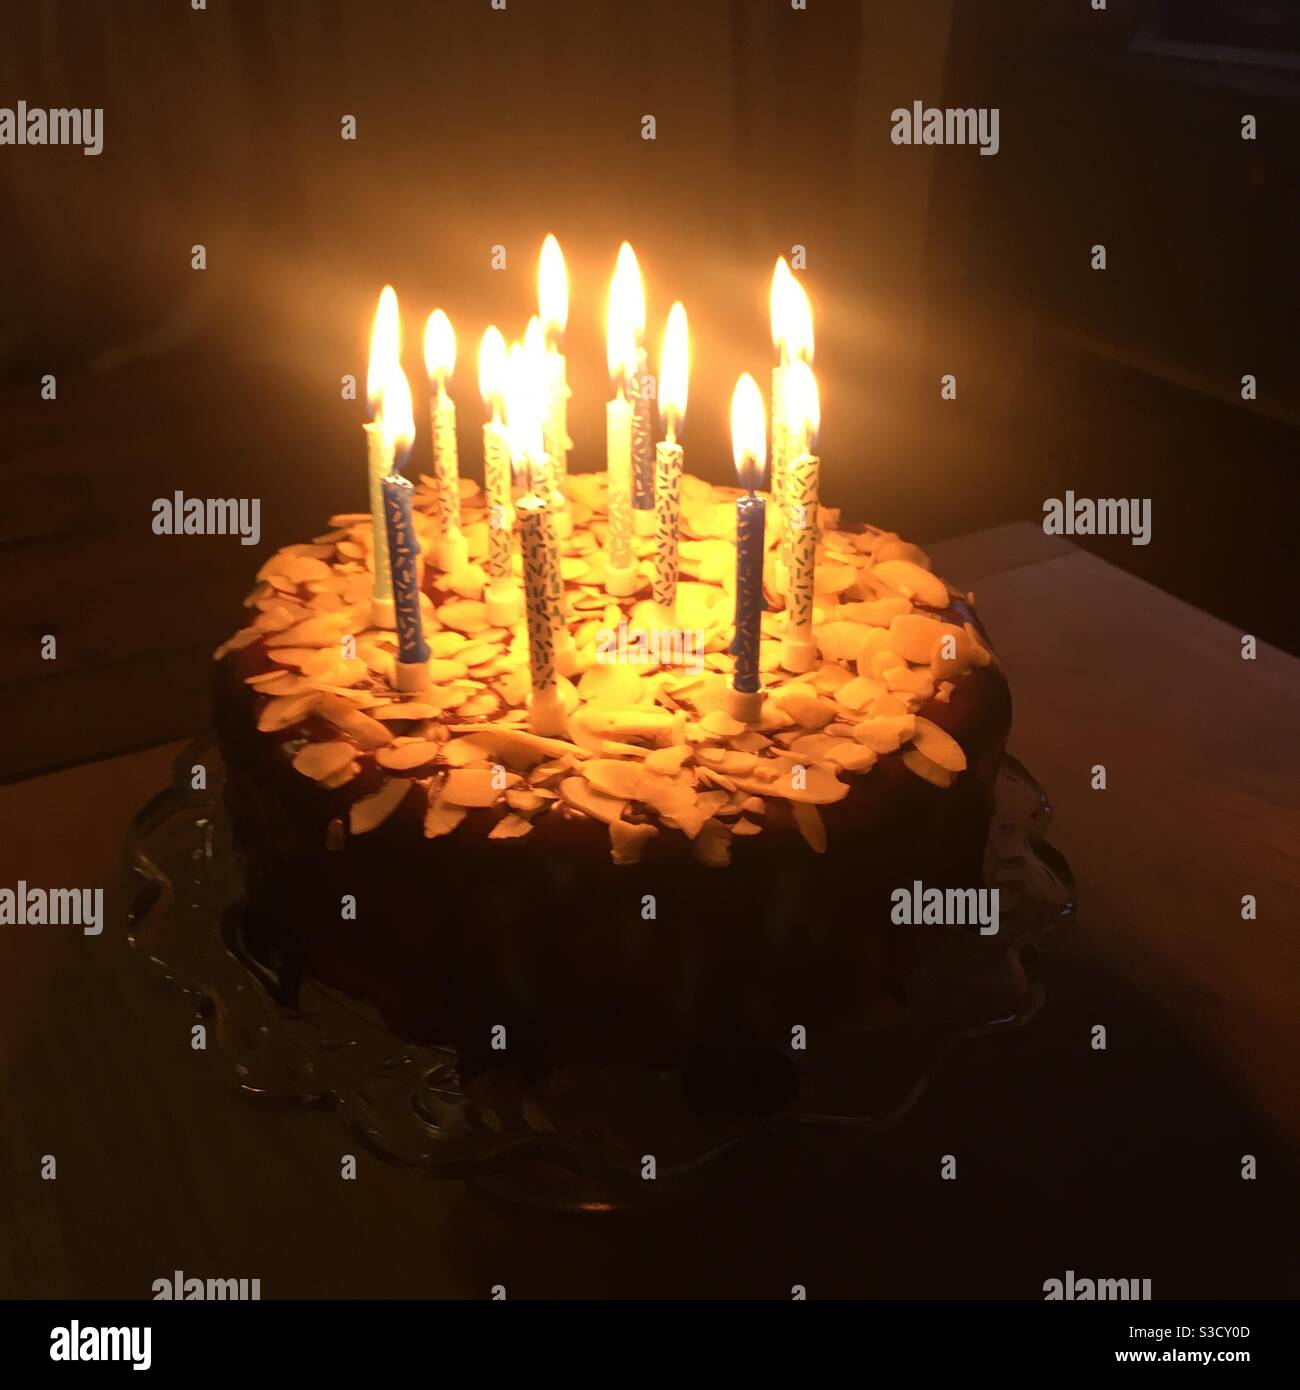 14th-birthday-celebration-cake-stock-photo-alamy